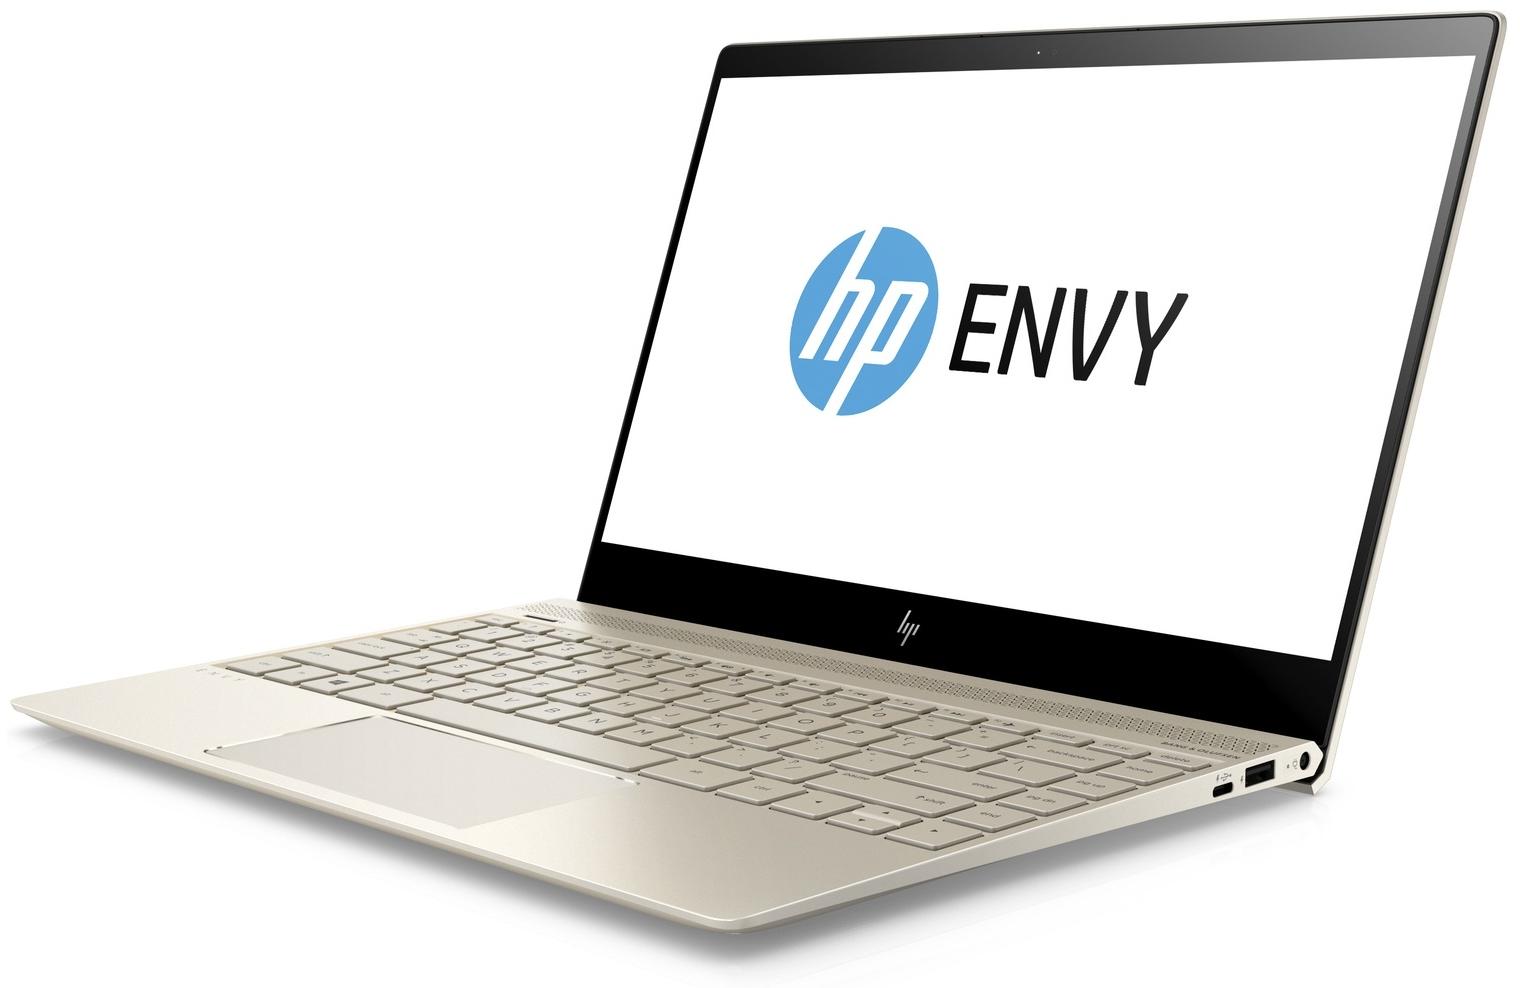   HP Envy 13-ah0005ur (4GX46EA)  1